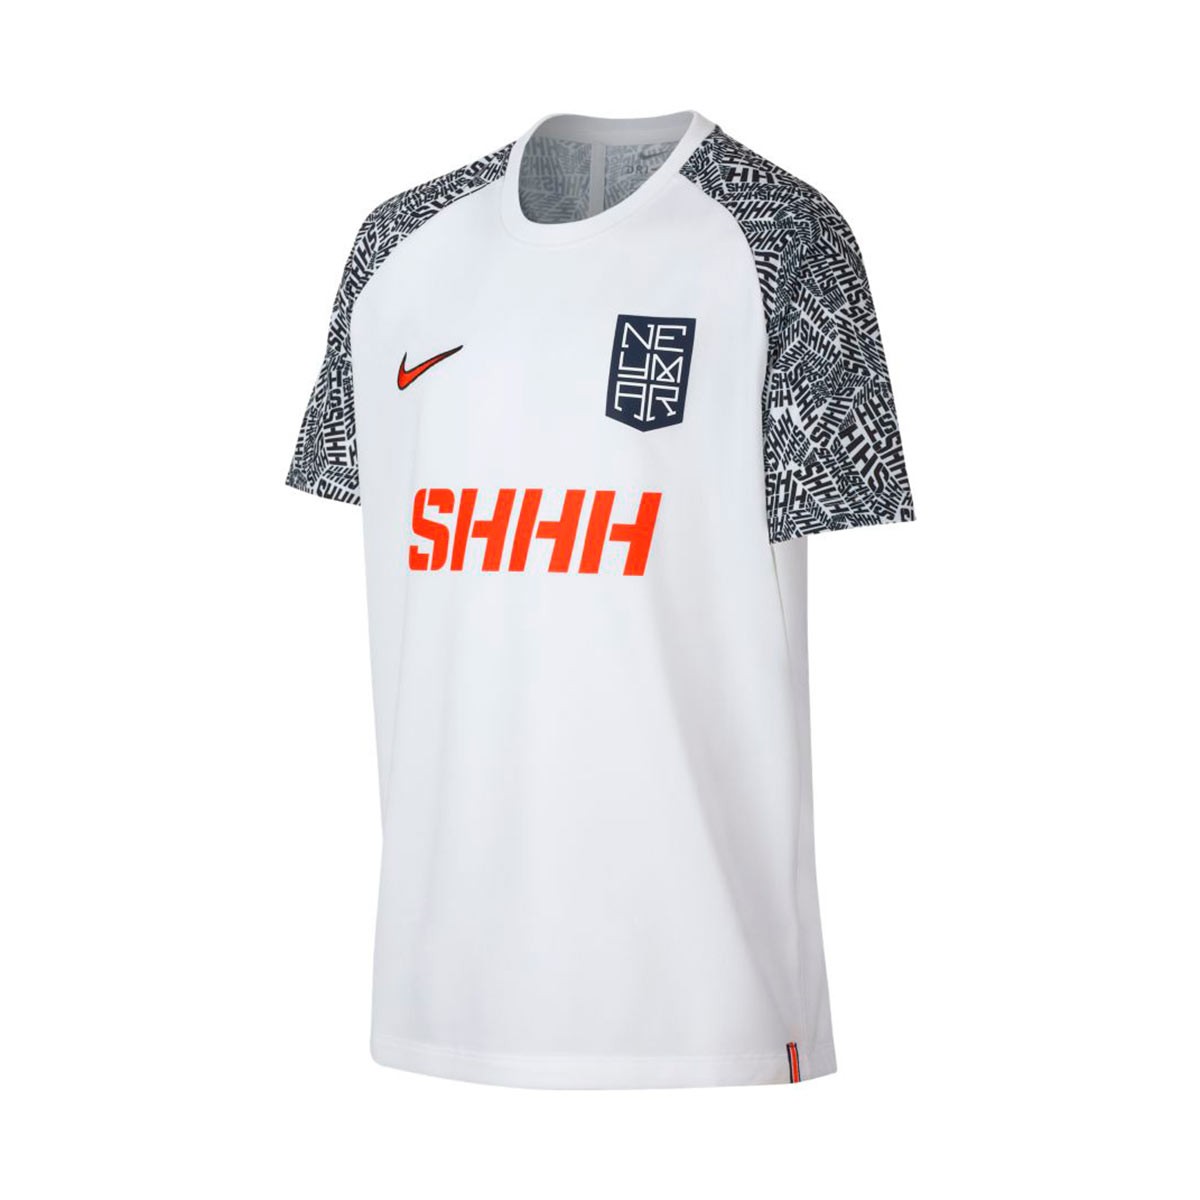 Jersey Nike Dri-FIT Neymar Niño White-Challenge red - Football store Fútbol  Emotion